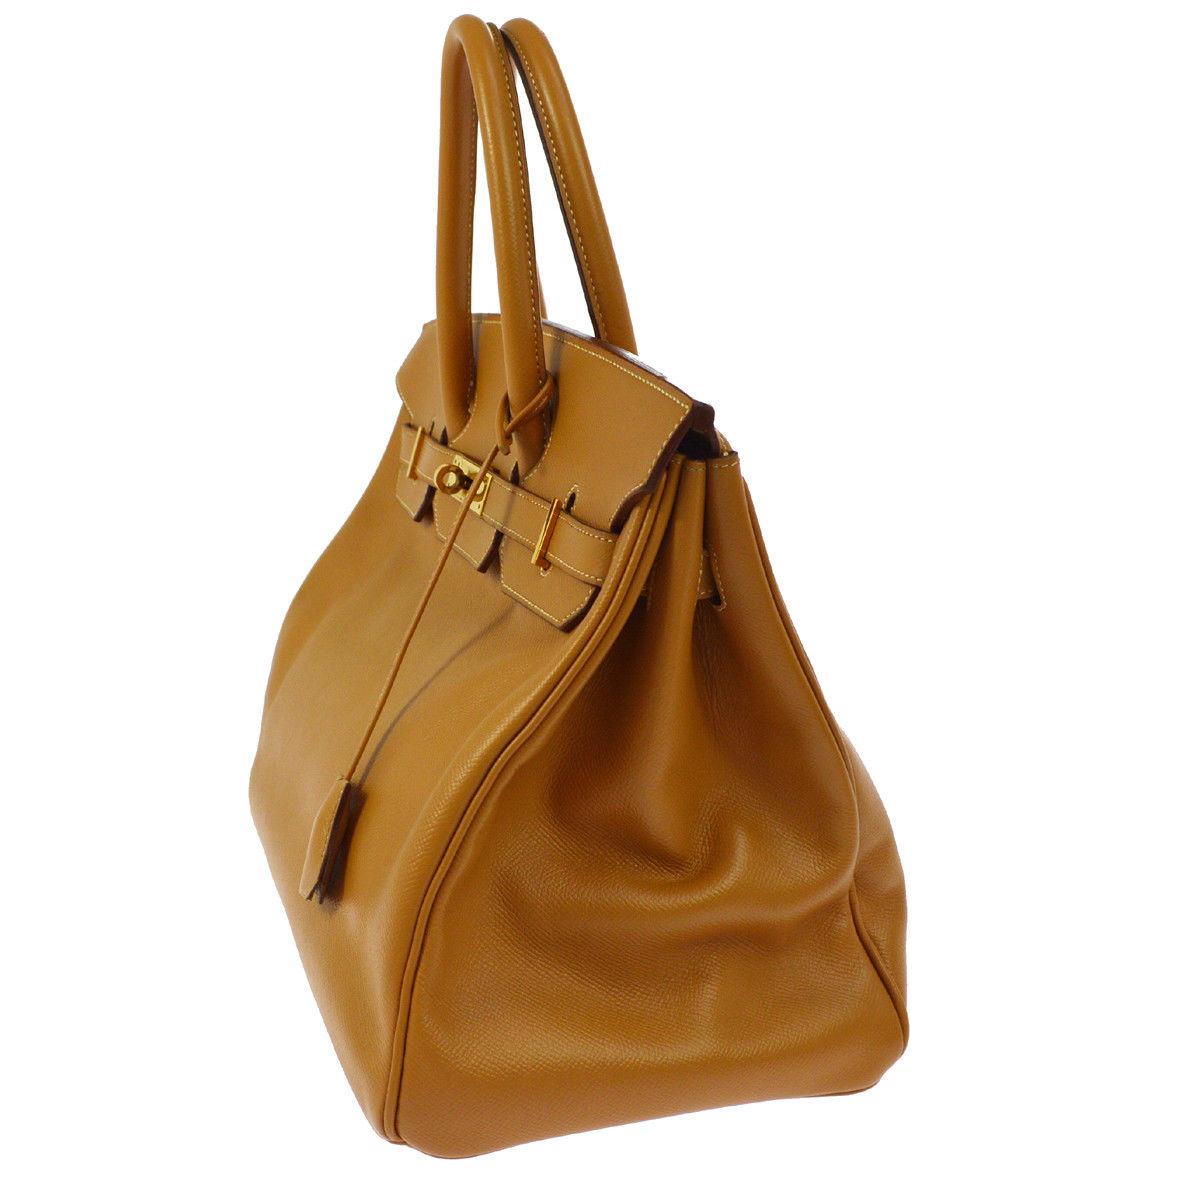 Orange Hermes Birkin 35 Cognac Leather Top Handle Satchel Carryall Bag W/Accessories